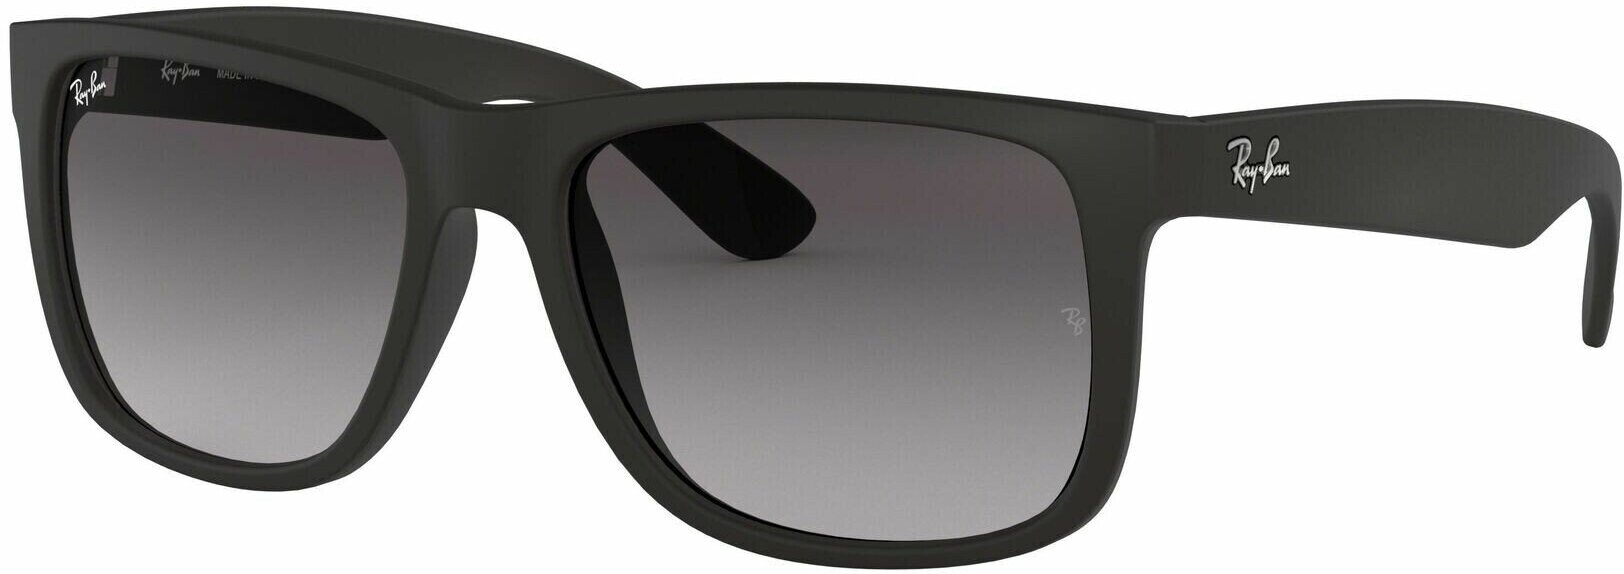 Солнцезащитные очки Ray-Ban  Ray-Ban RB 4165 601/8G